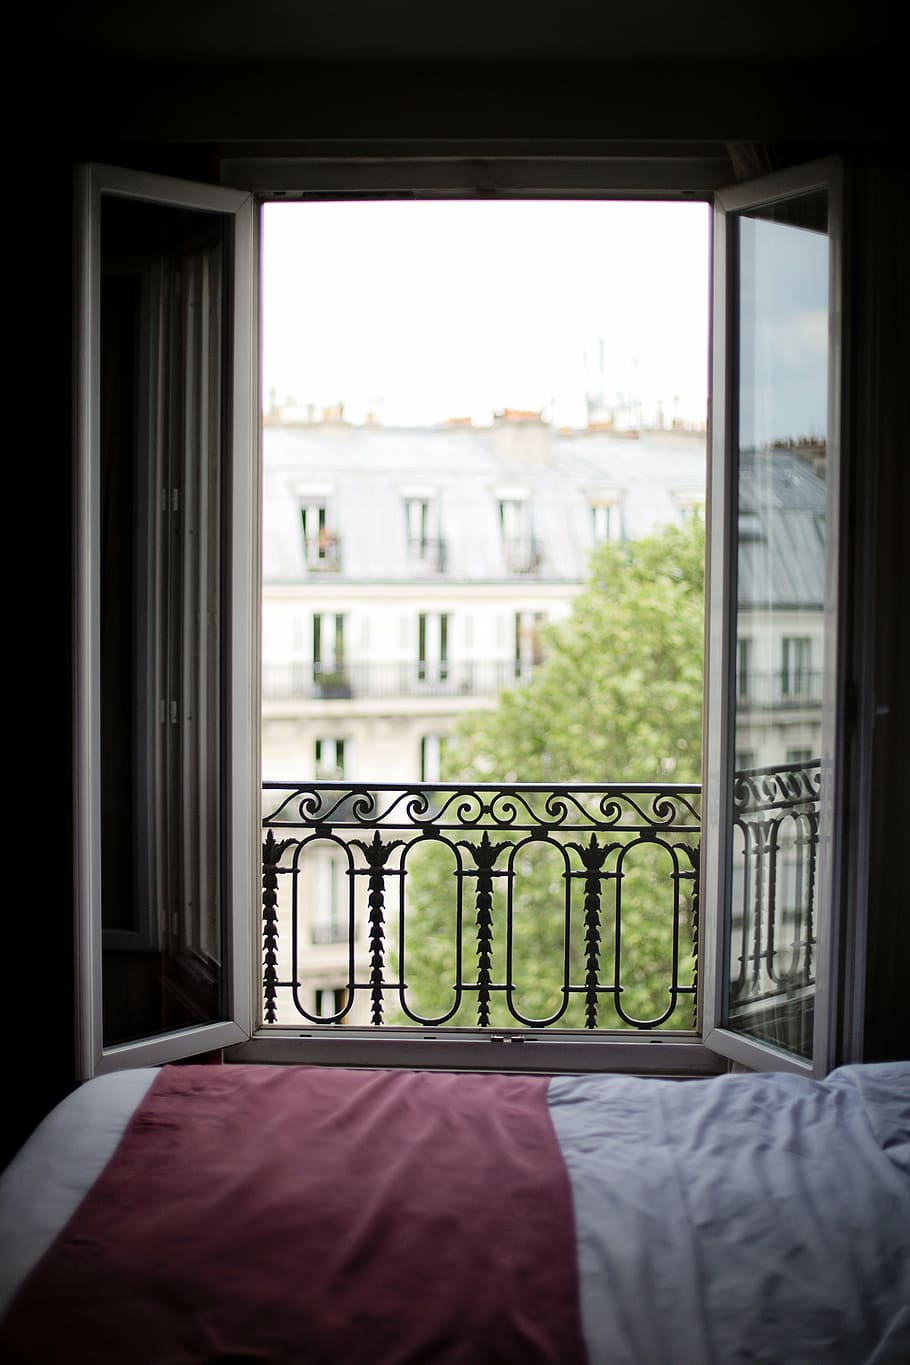 portrait photography, open, window, daytime, bedroom window, france, interior, paris, europe, bed